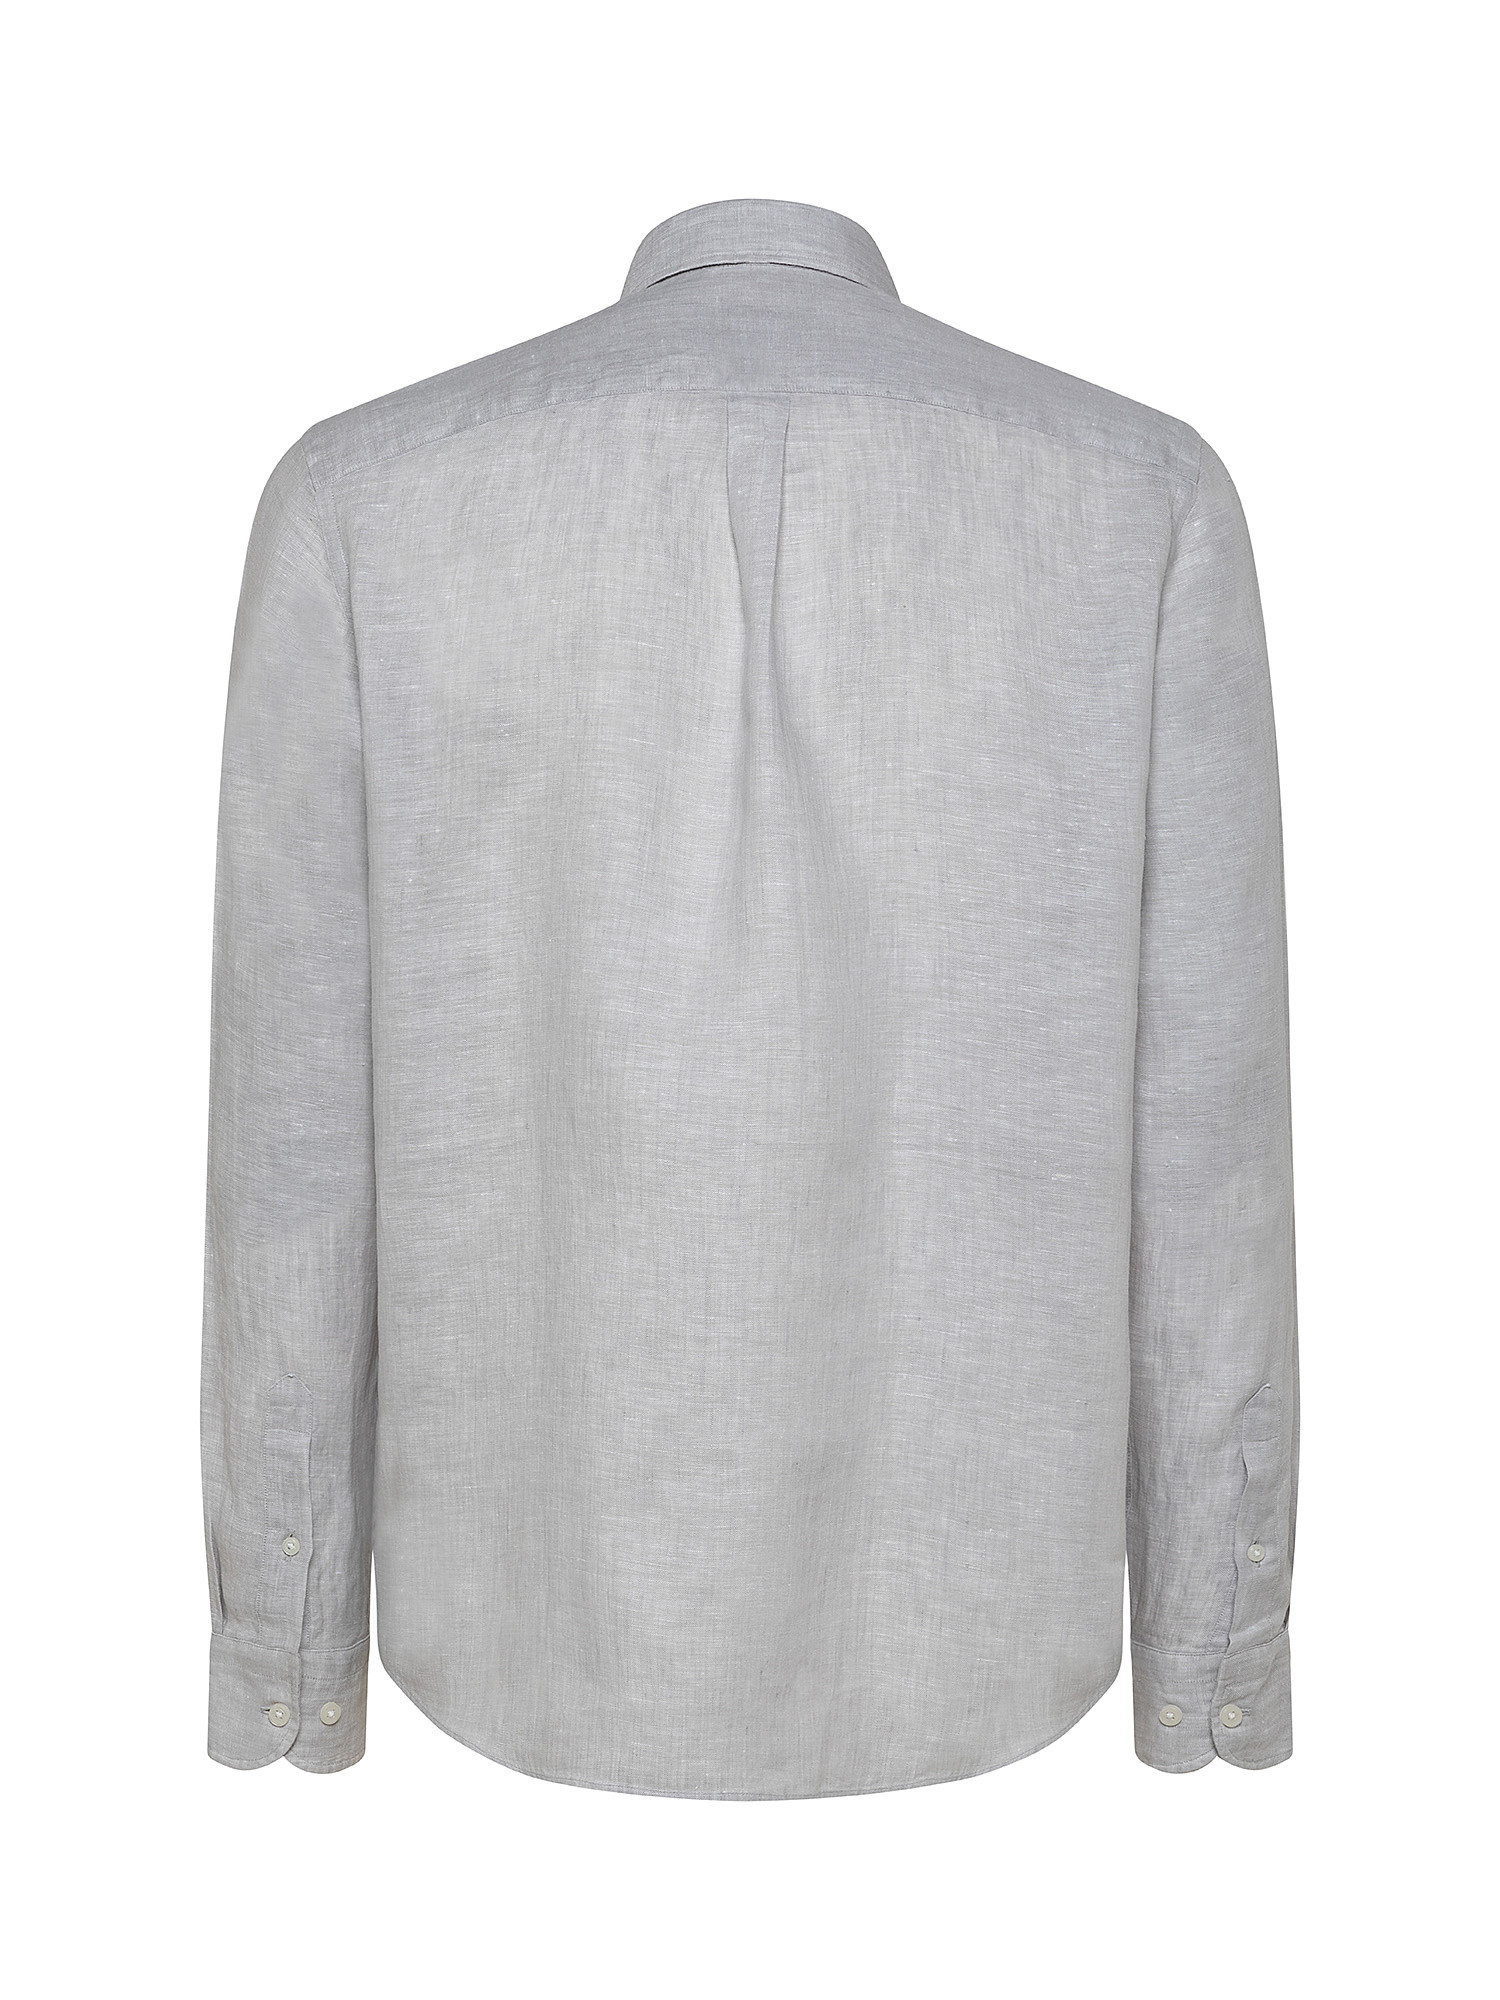 Camicia tailor fit in lino, Grigio chiaro, large image number 1